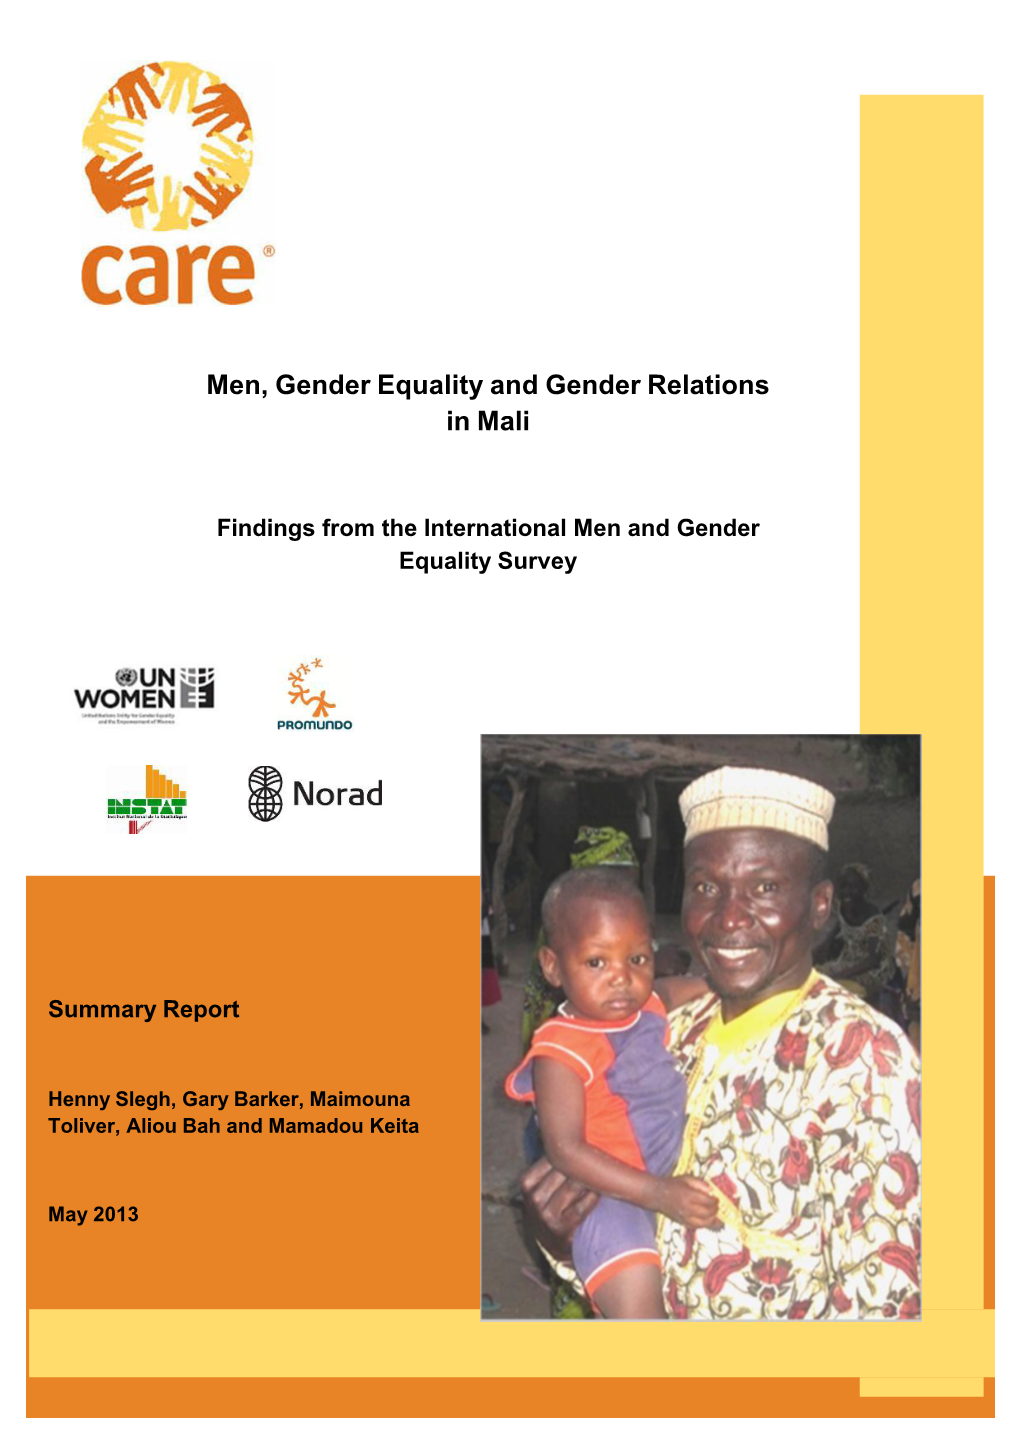 Men, Gender Equality and Gender Relations in Mali